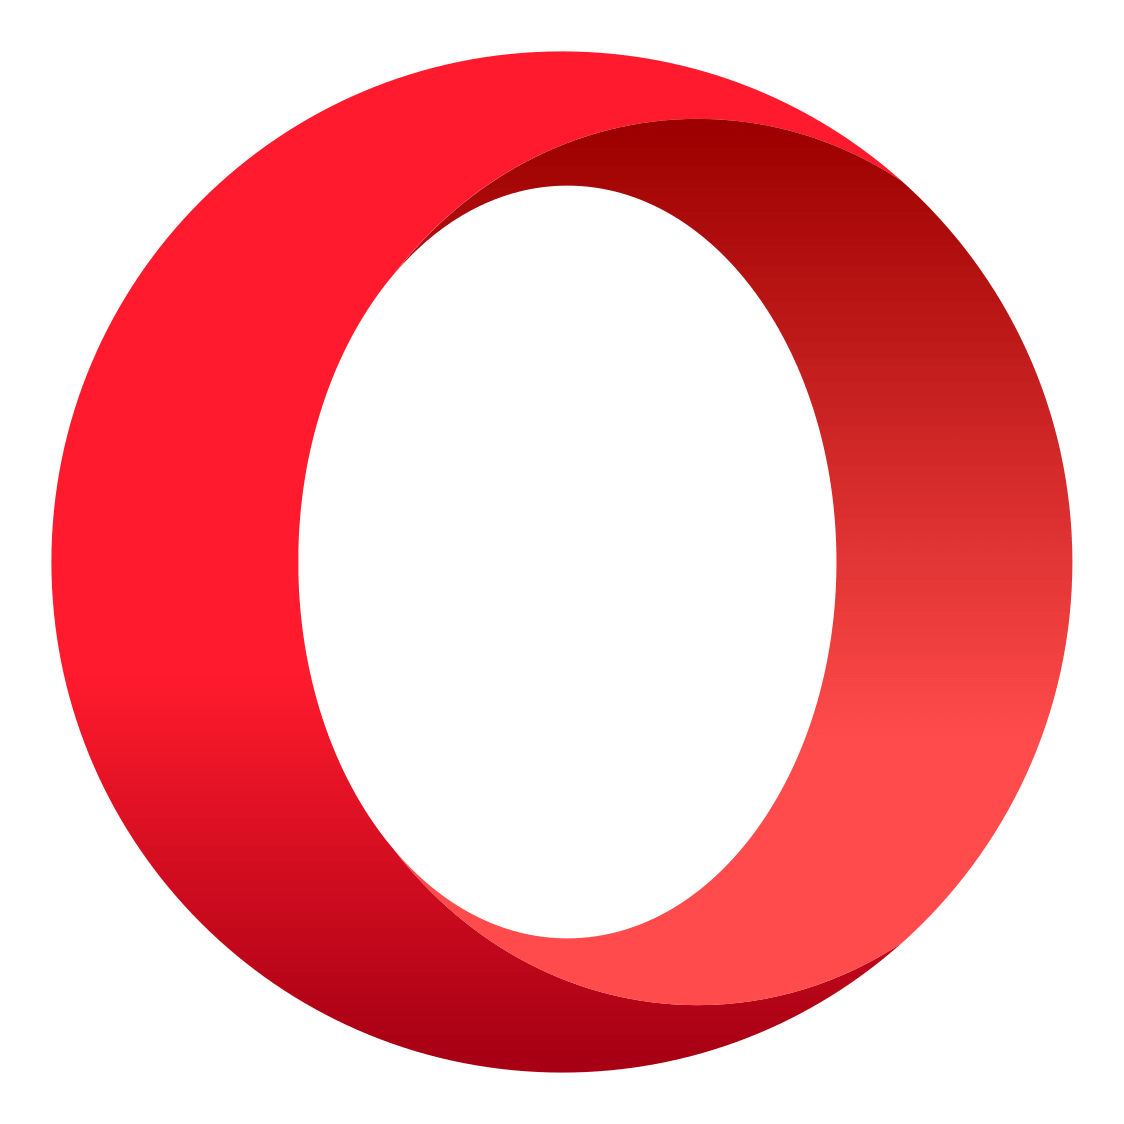 opera browser 2020 free download